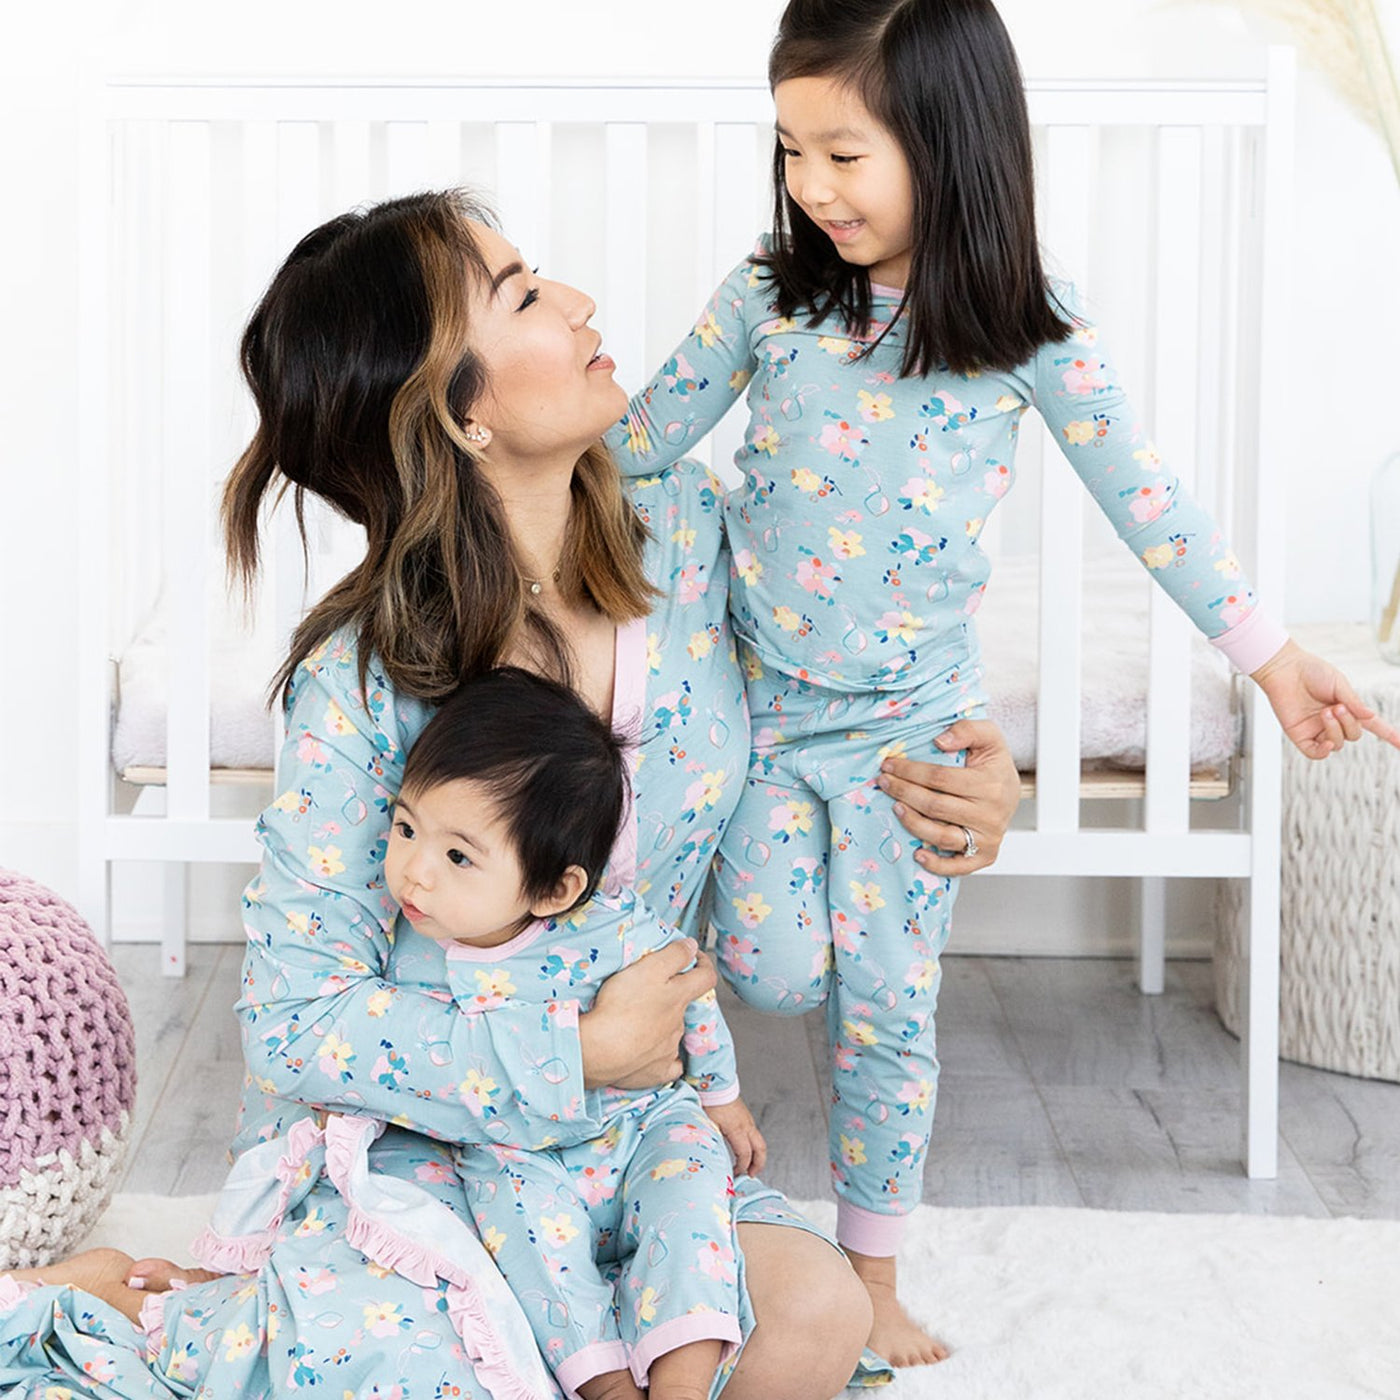 Notting Hill Modal Magnetic Toddler Pajamas